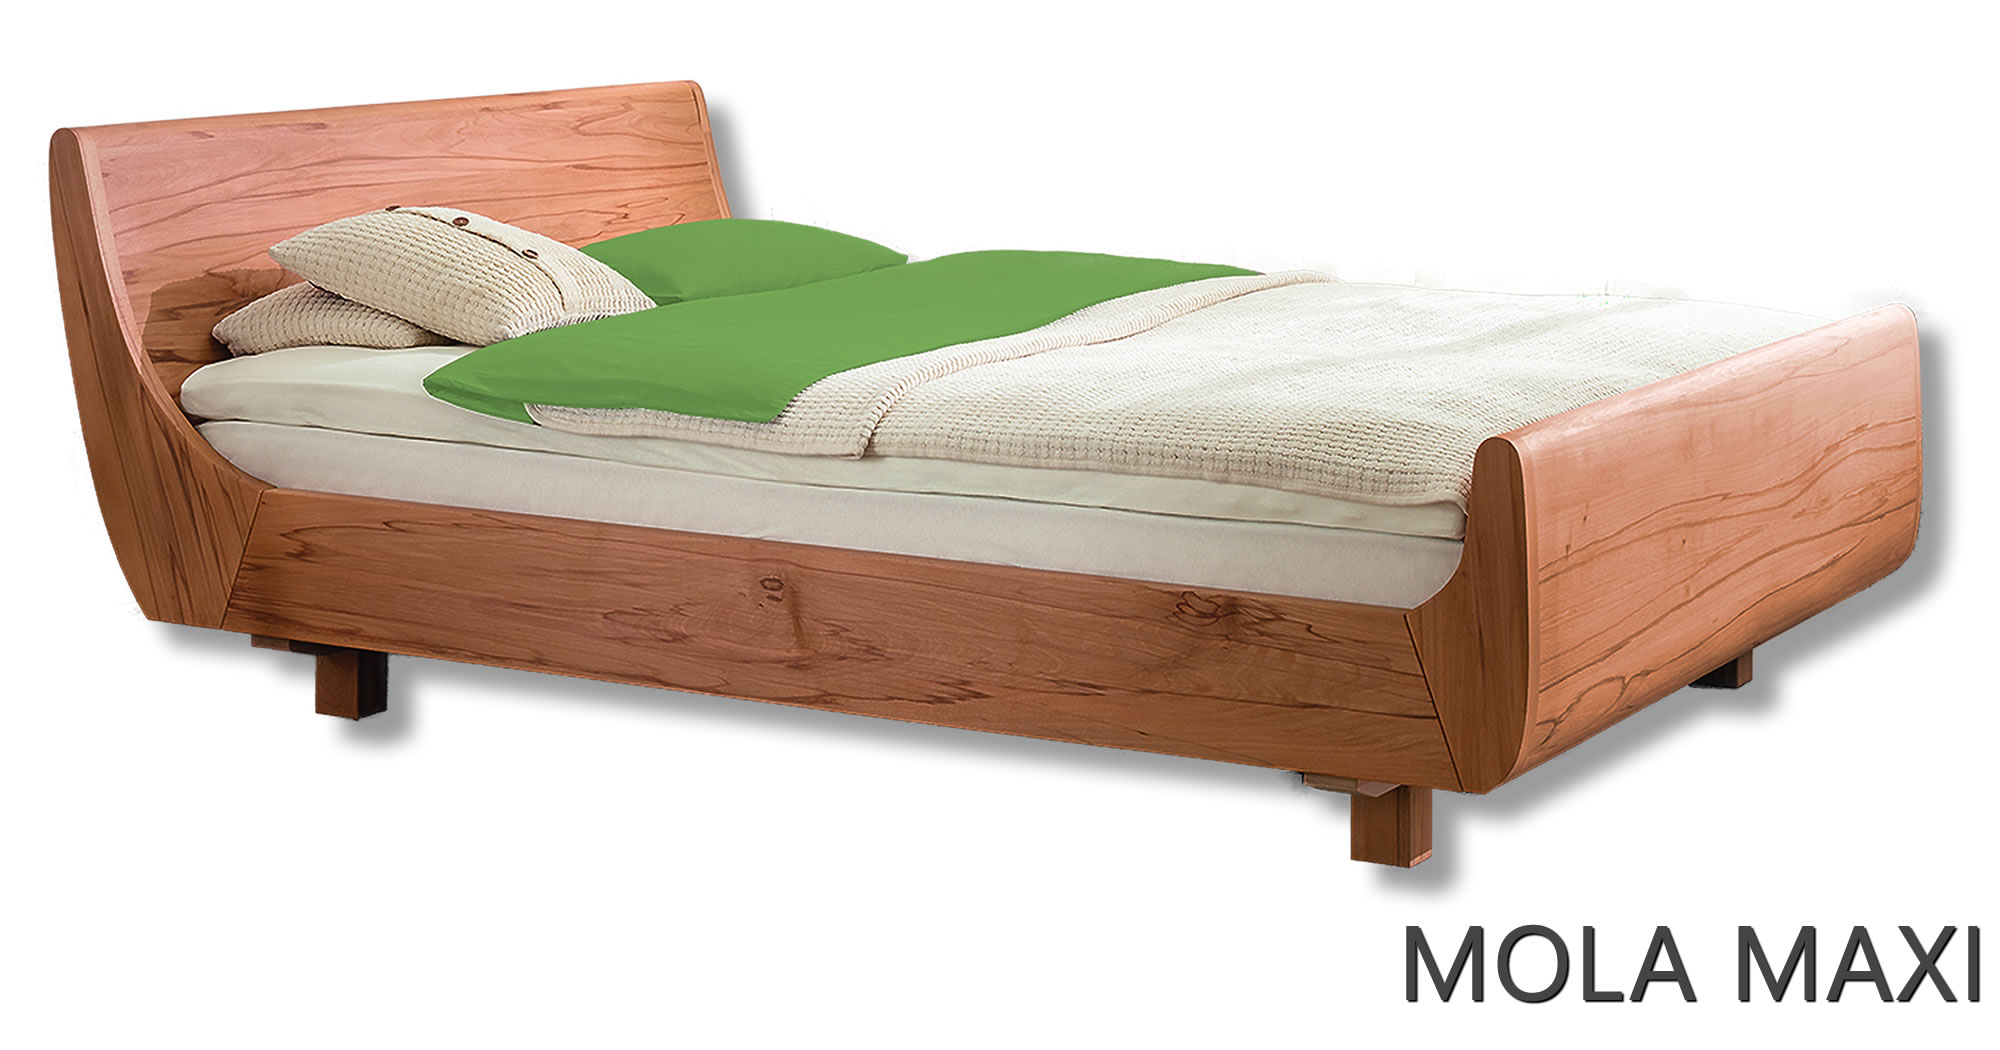 Mola Maxi Massivholzbett aus Naturholz von dormiente. Made in germany